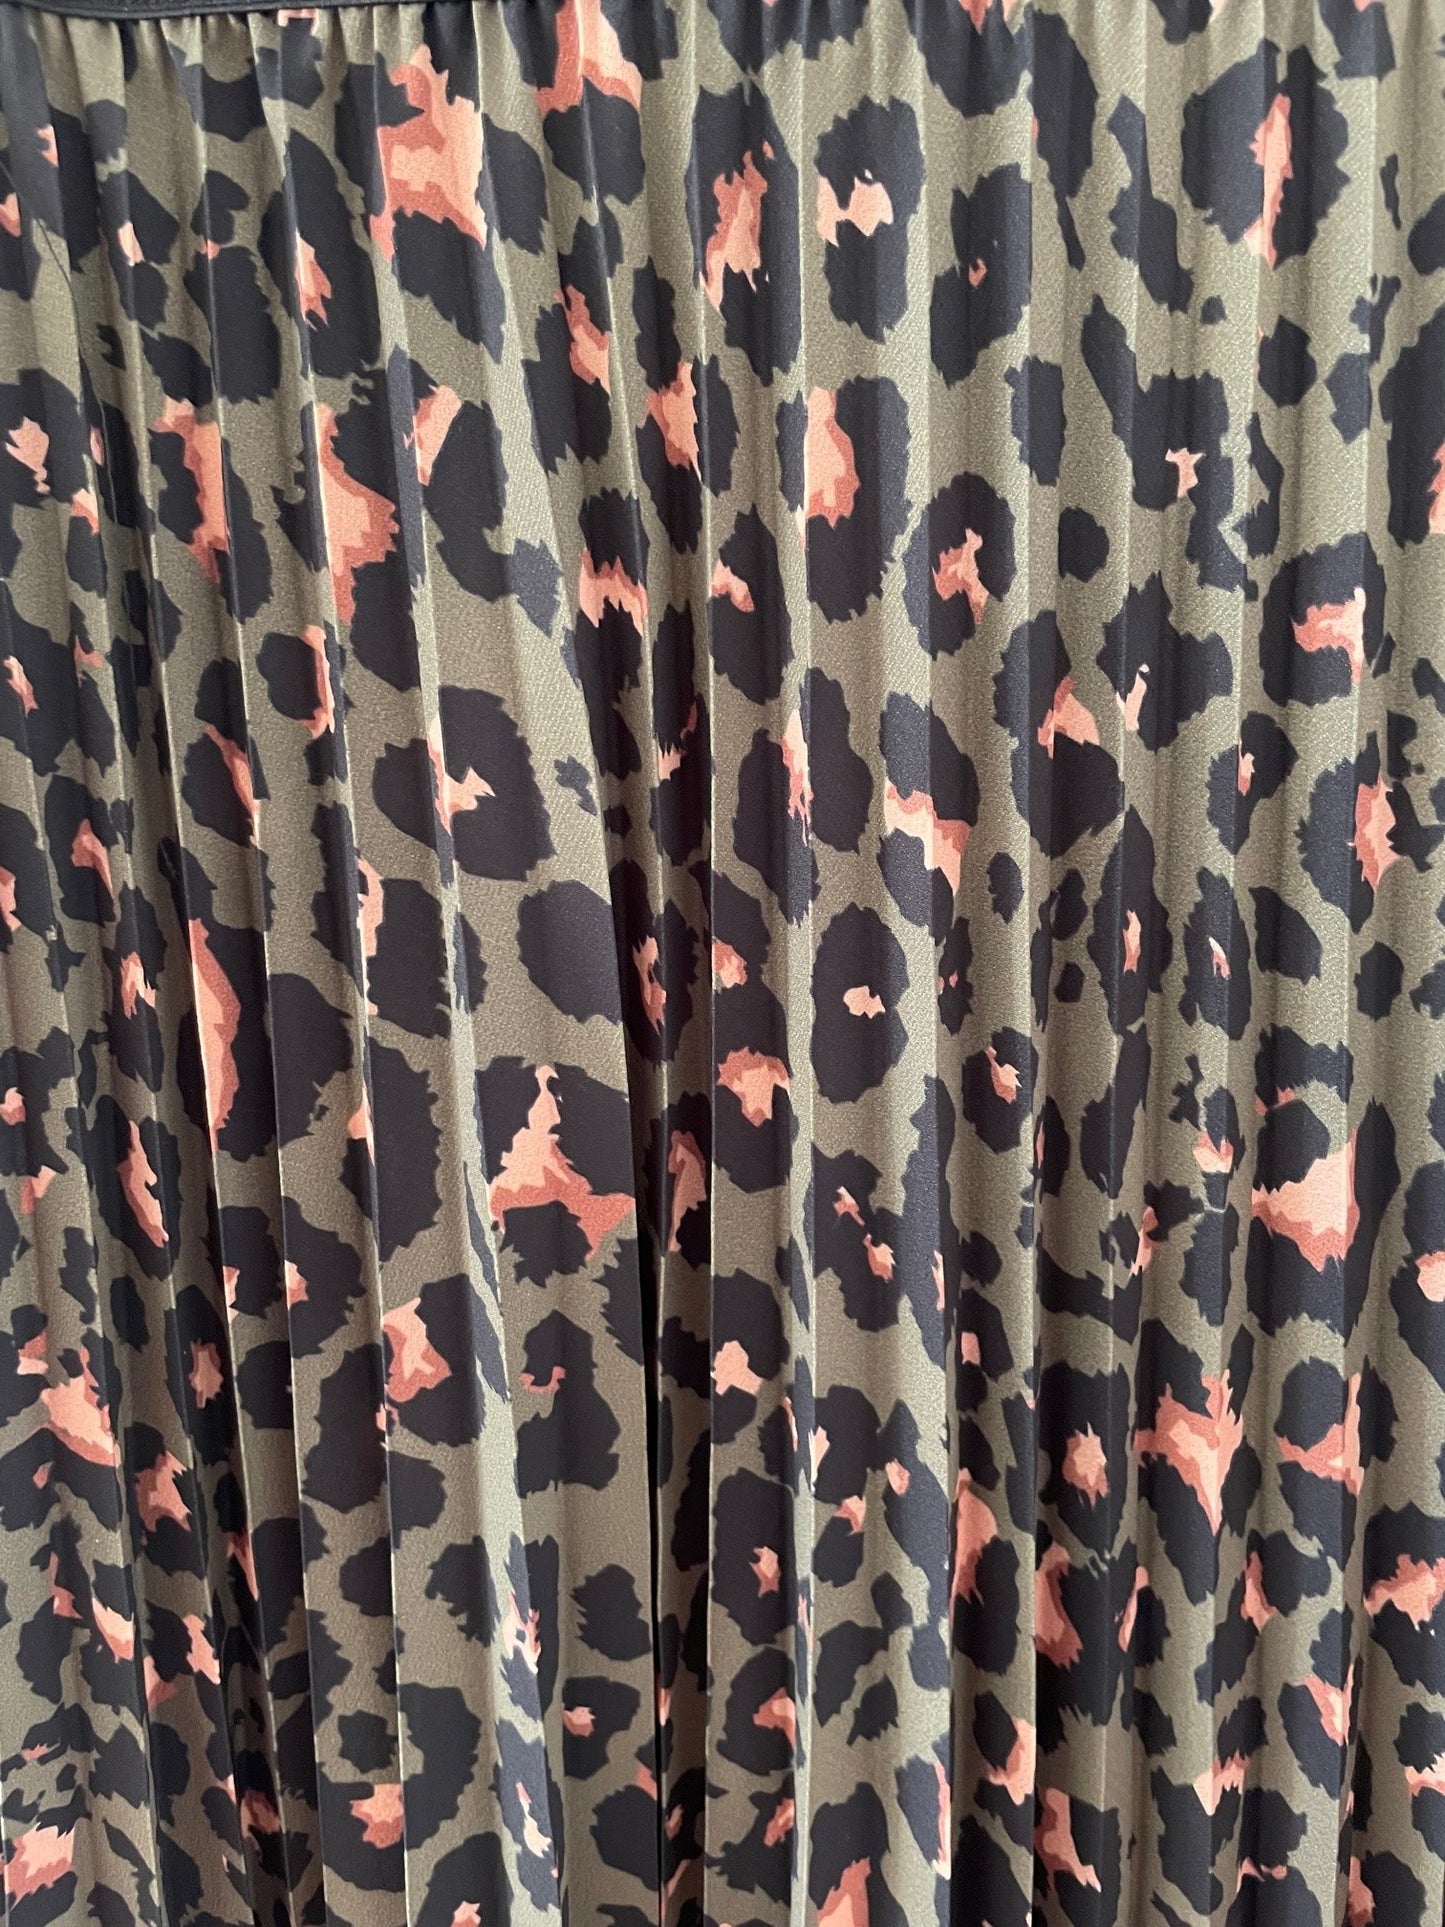 Leopard Pleated Skirt | Khaki